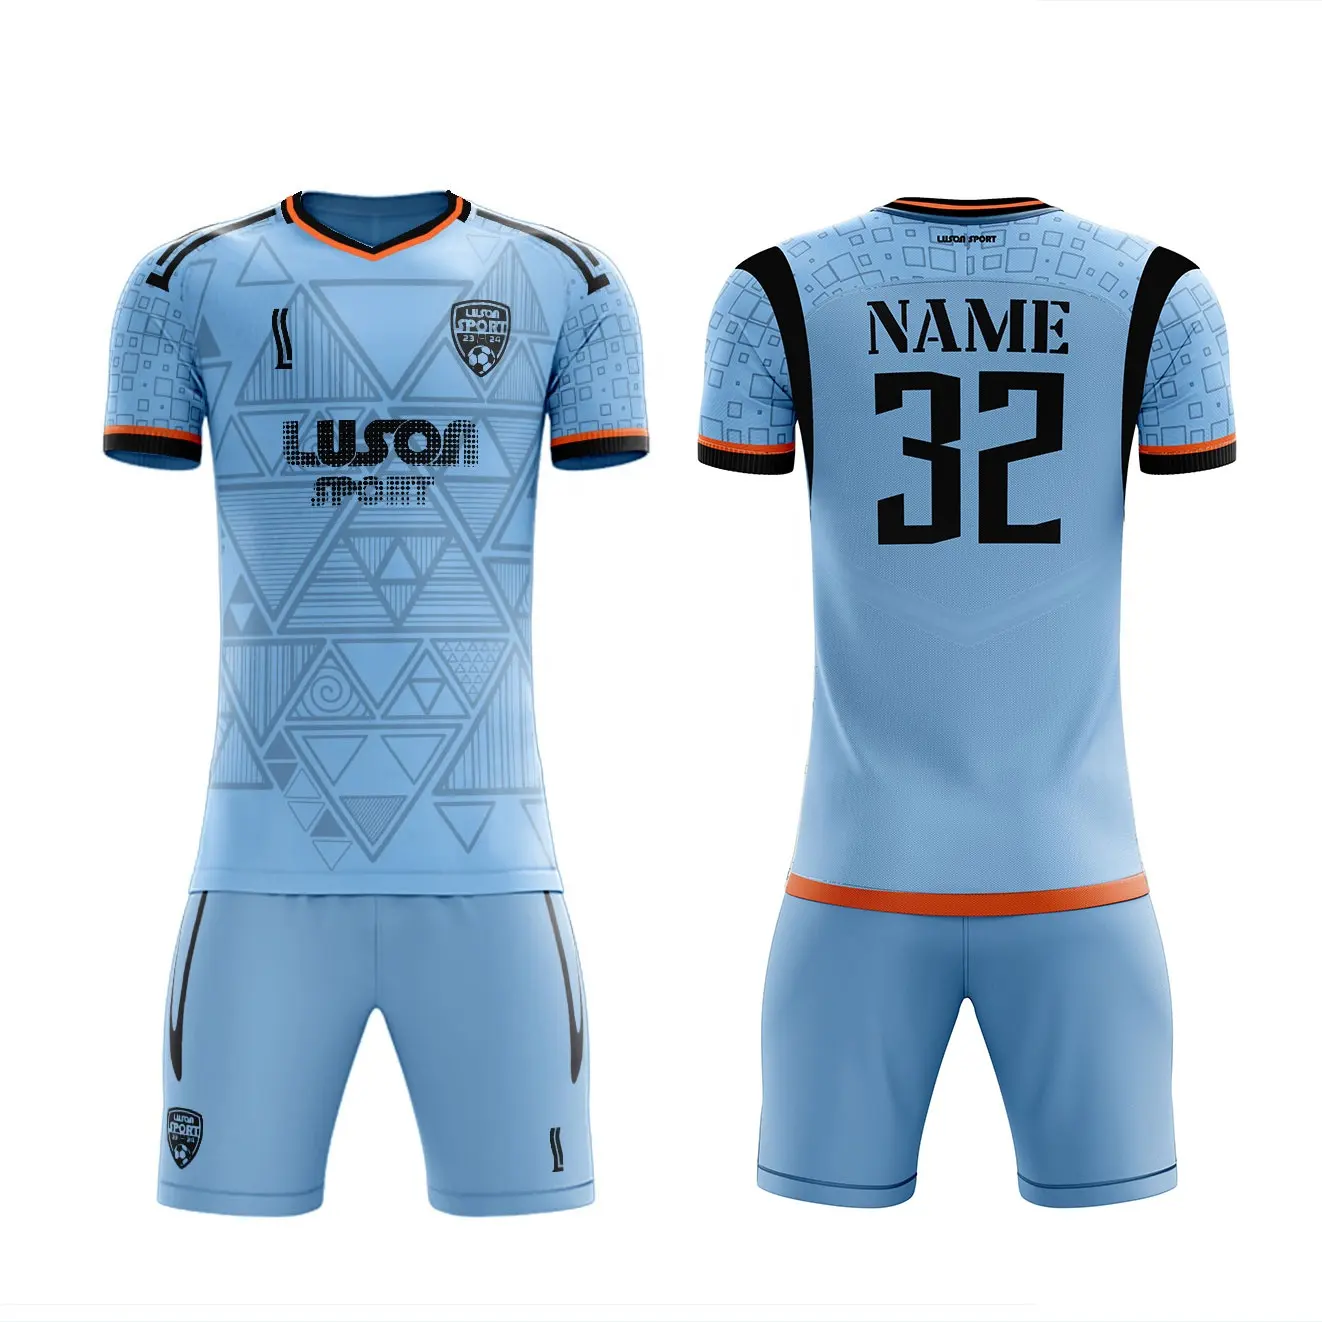 Luson Premium Quick Dry Soccer Wear Tailândia Camisetas Uniforme Equipe de Futebol Sublimação Futebol Jersey Soccer Jersey